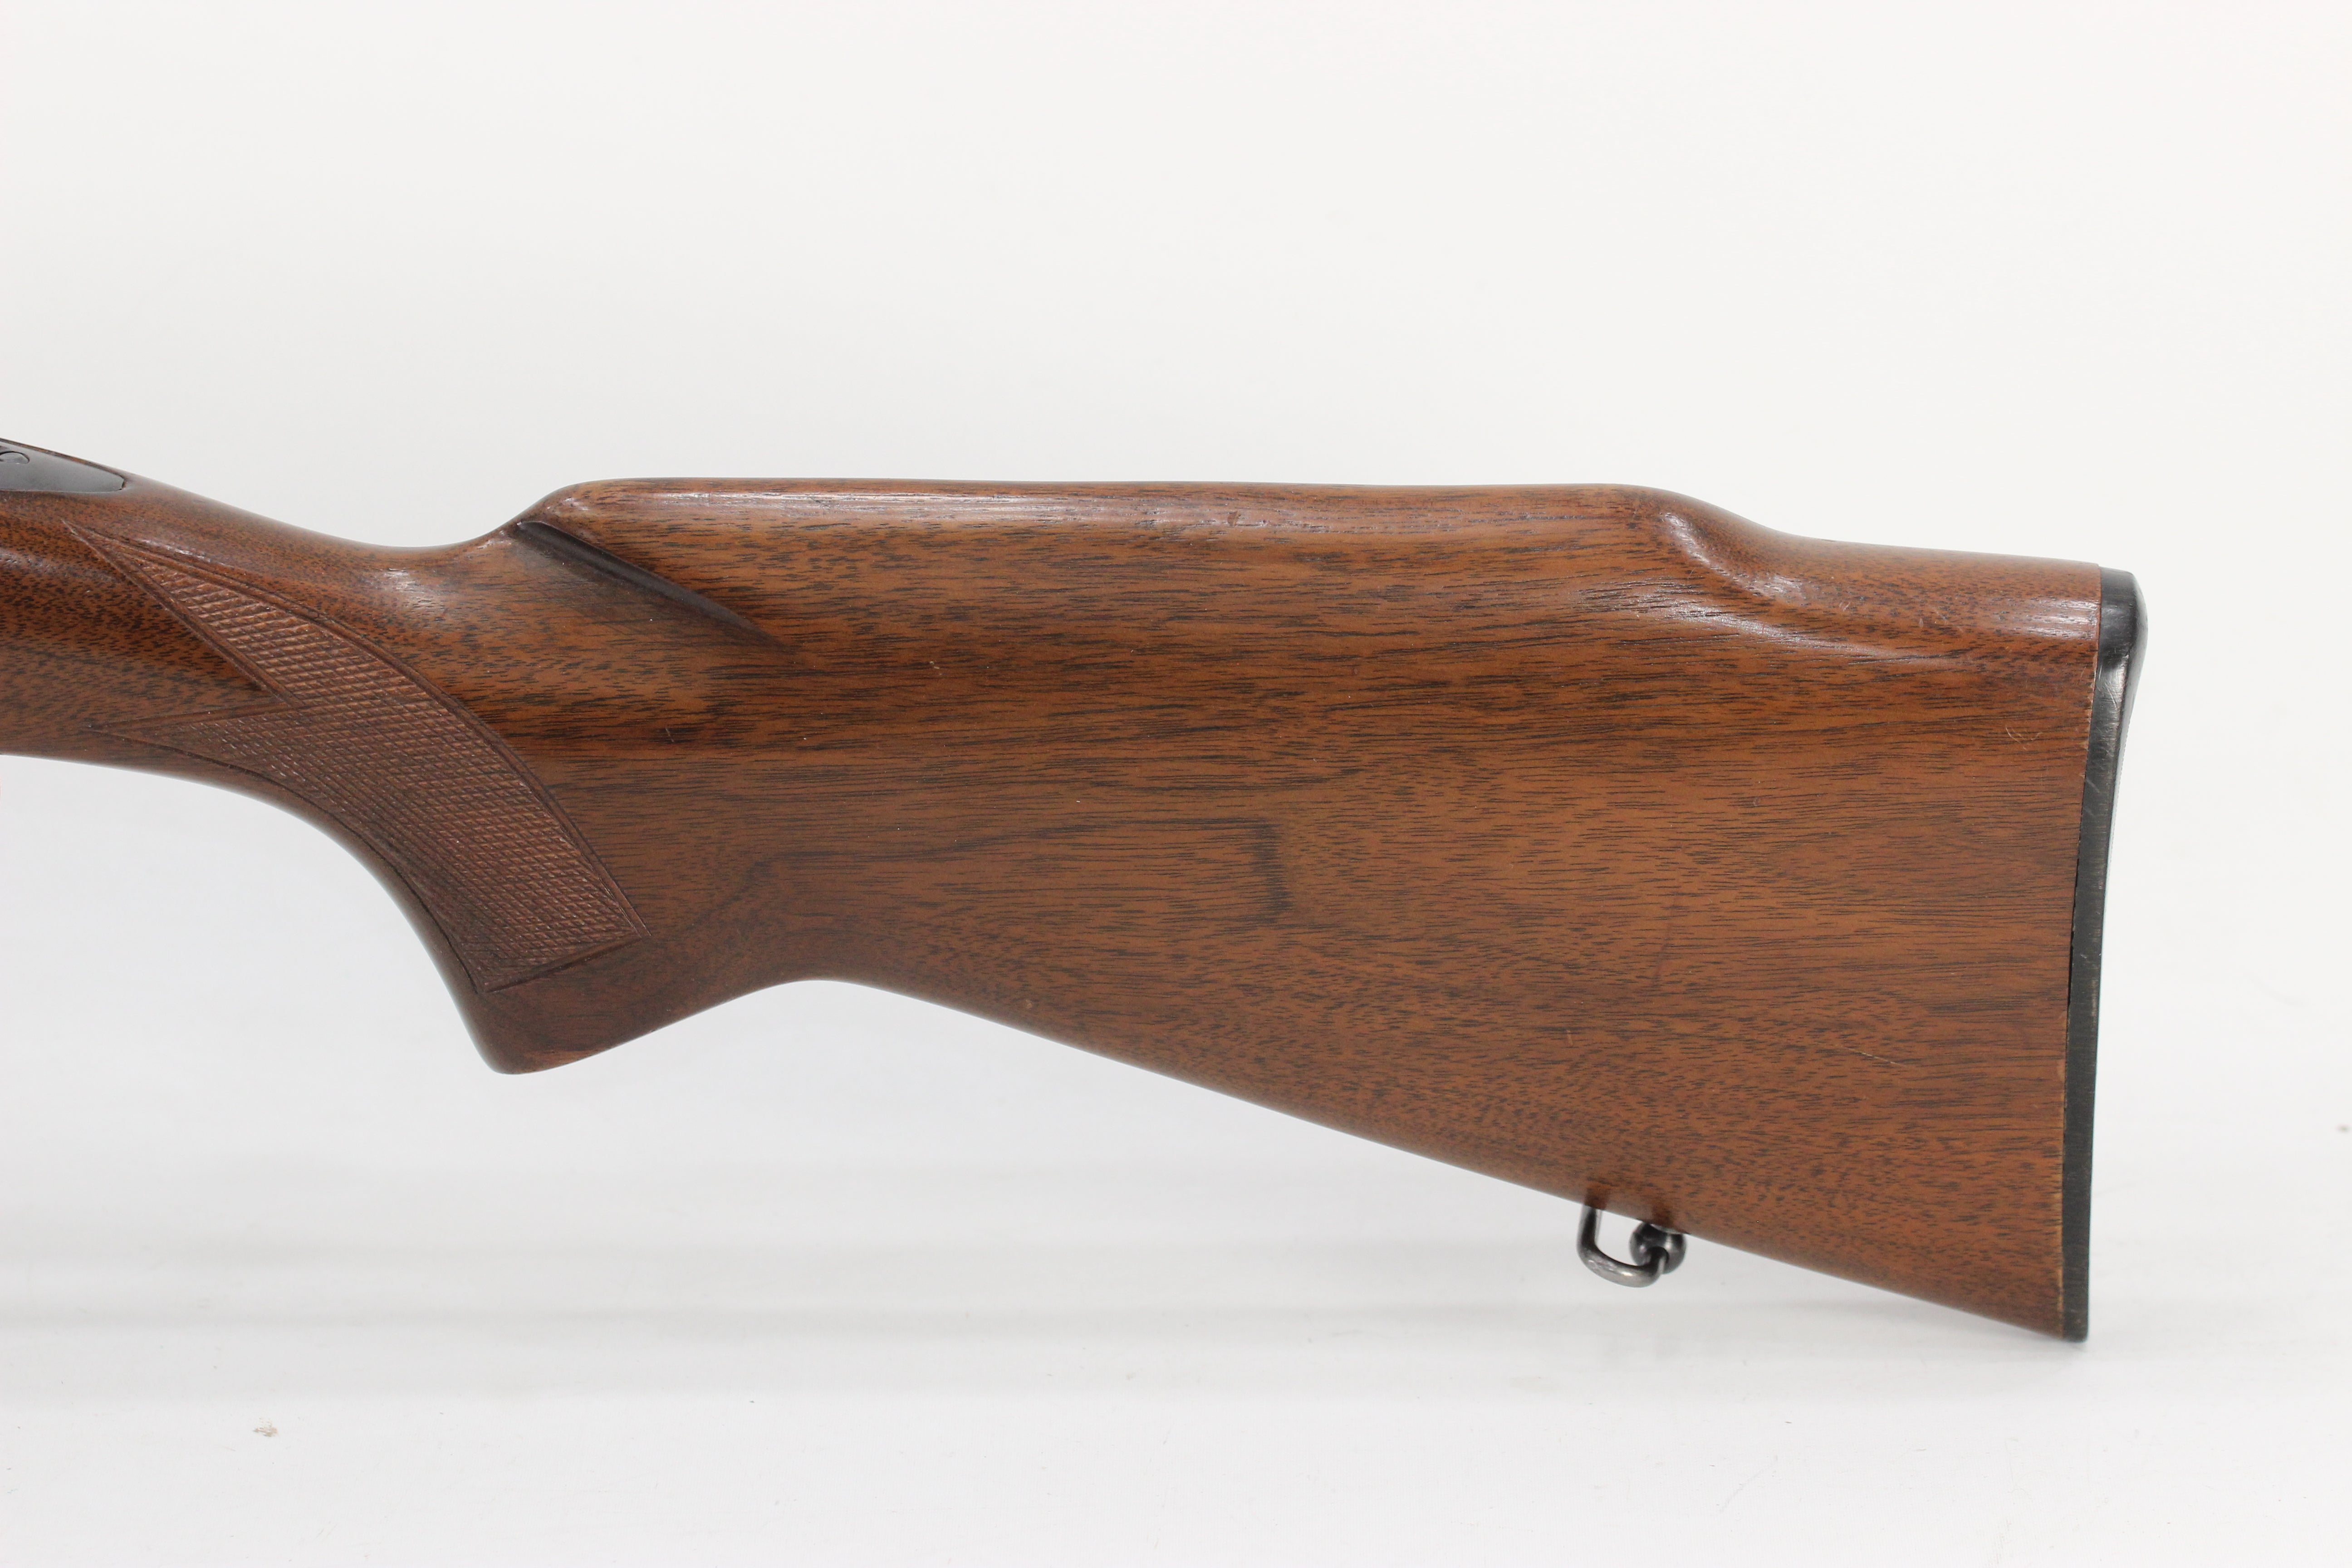 .243 Win Featherweight Rifle - 1961